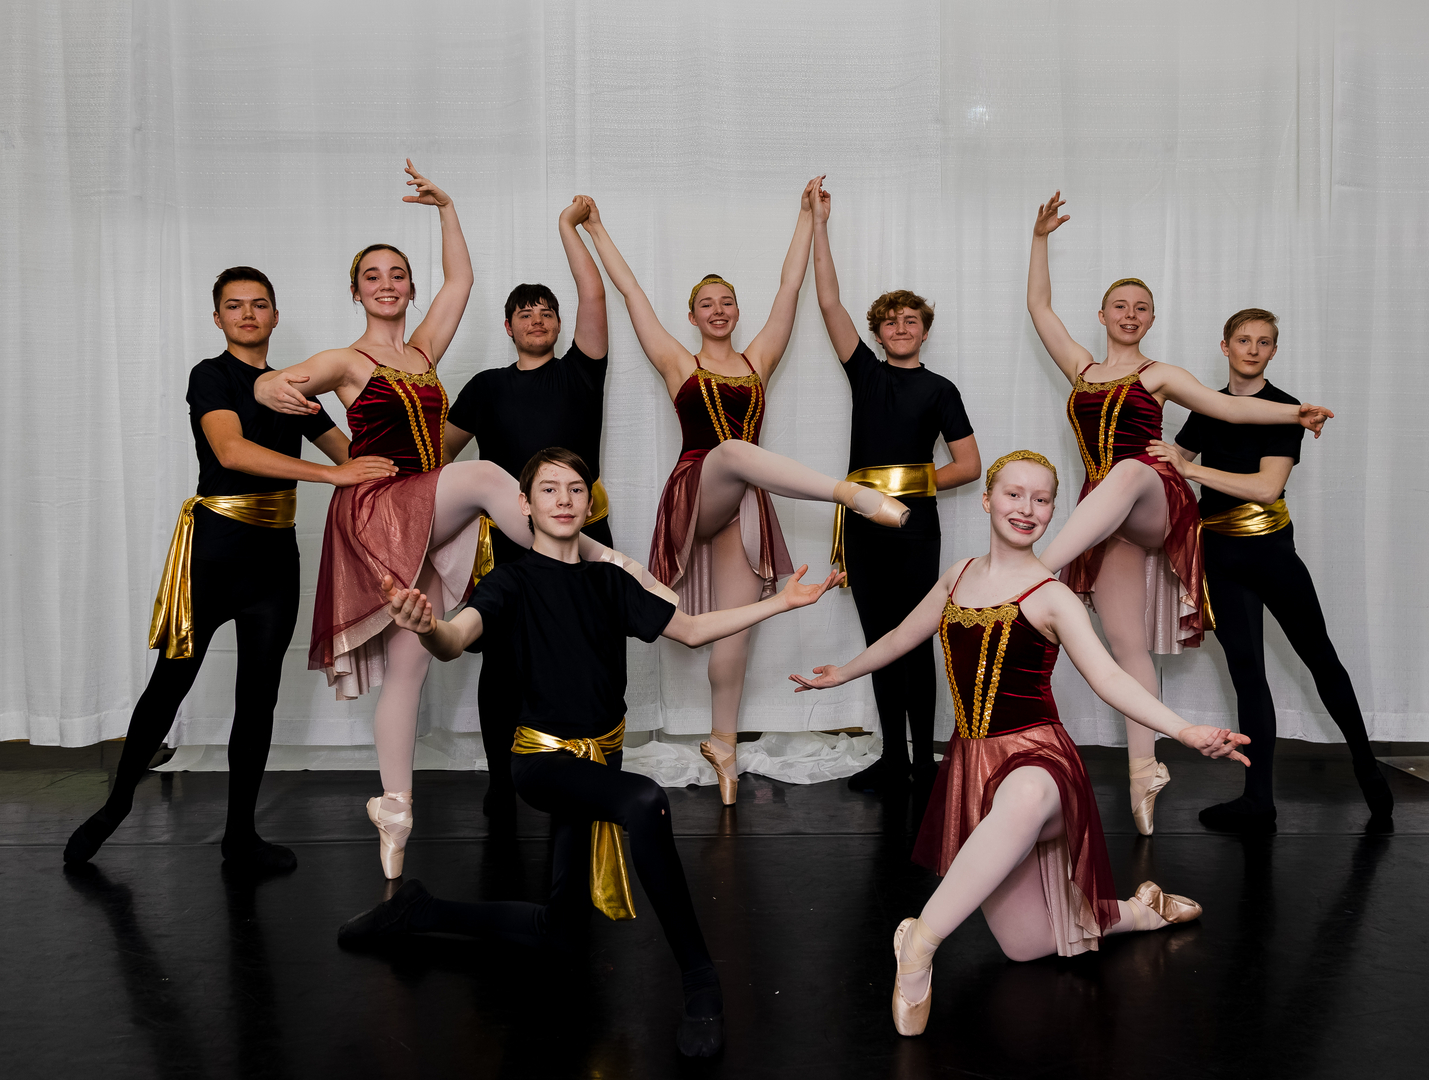 13 Dance Lessons For Kids ideas  dance, dance teacher, ballet positions